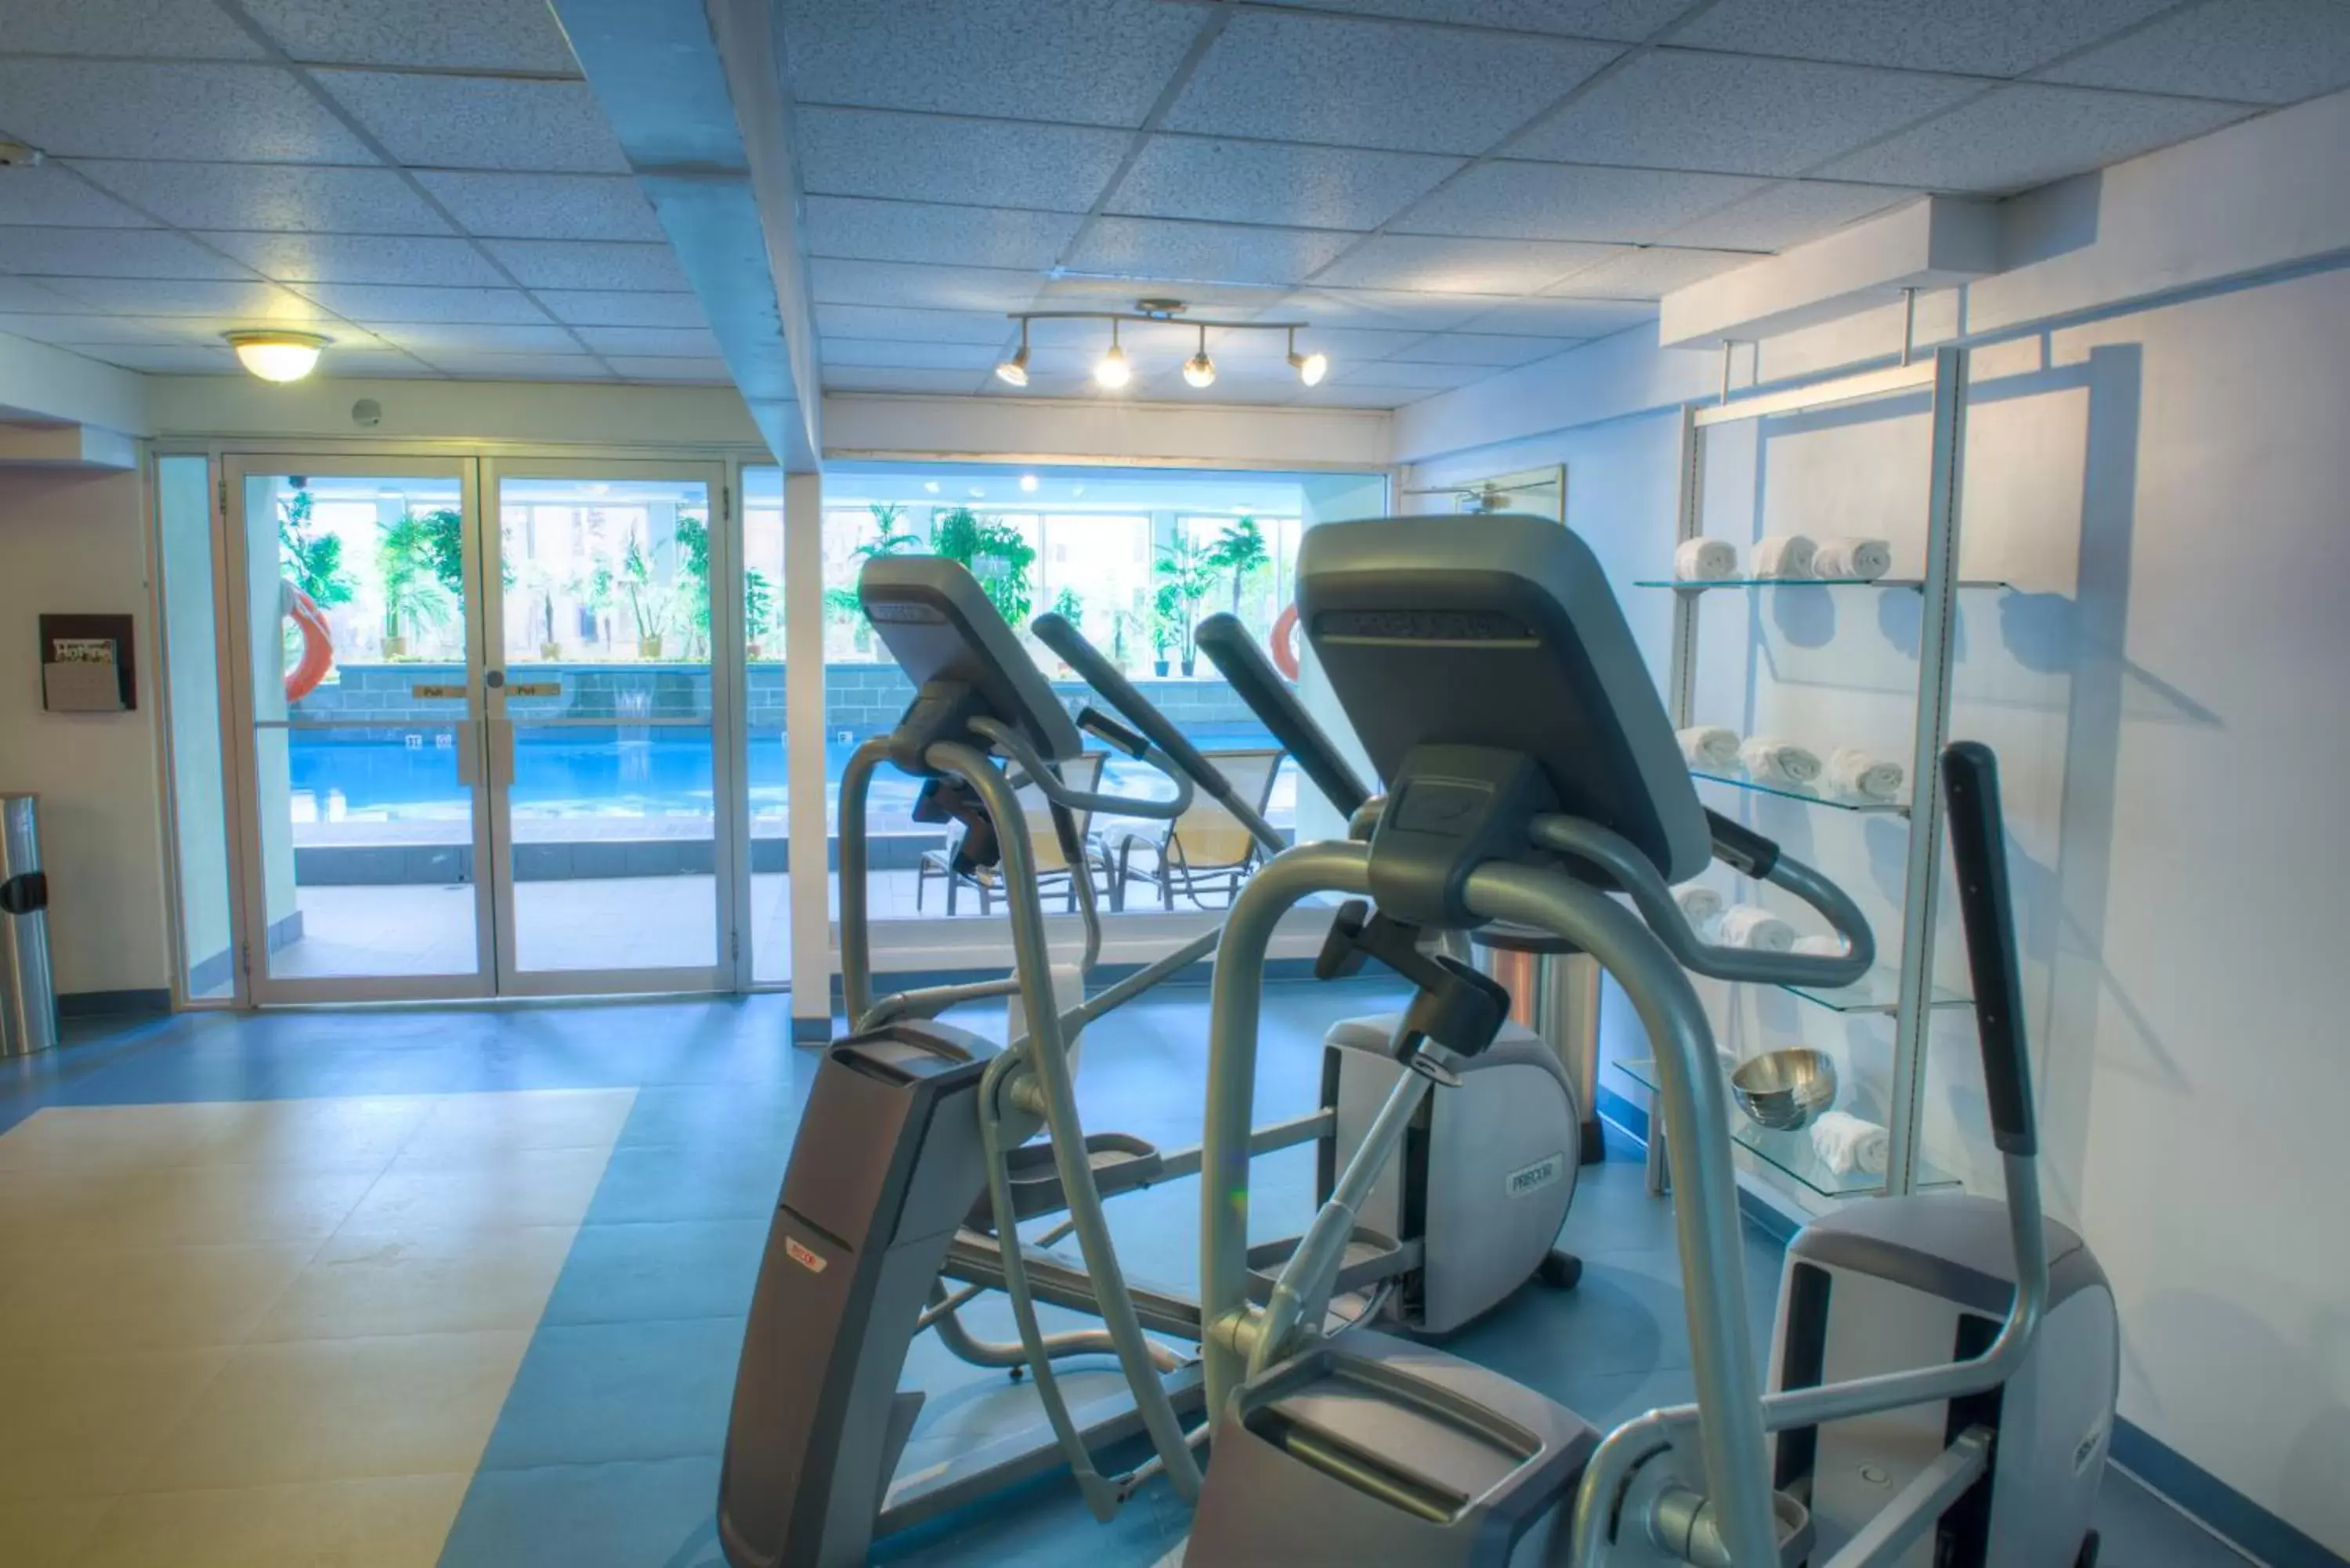 Fitness centre/facilities, Fitness Center/Facilities in Radisson Hotel Sudbury